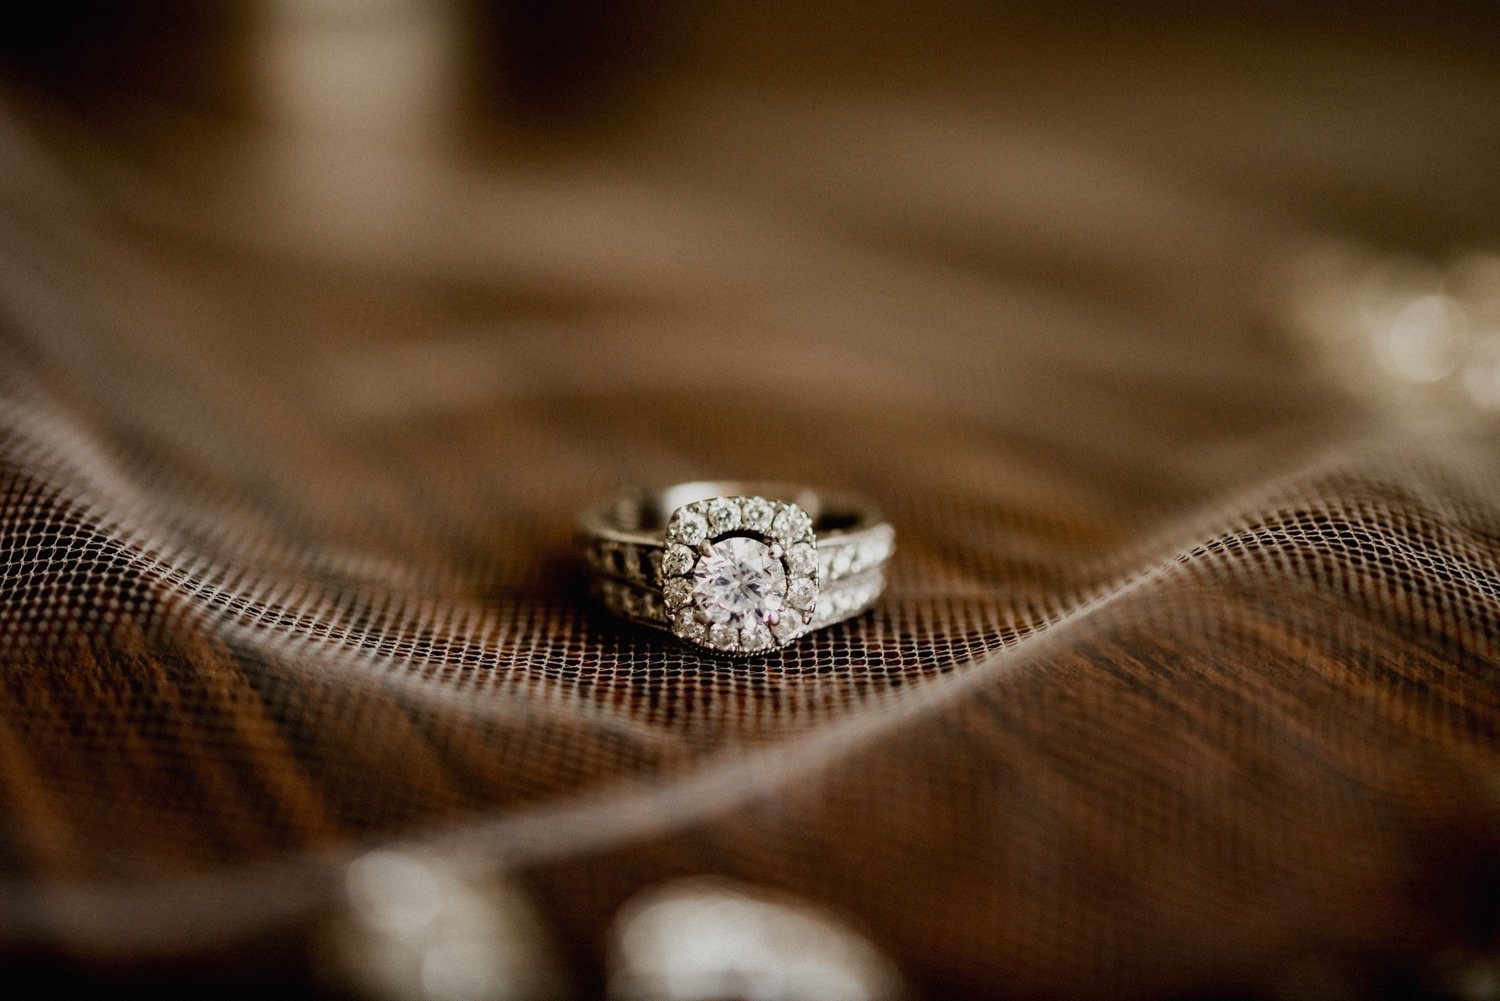 Des-Moines-iowa-botanical-garden-wedding-ring-diamond.jpg.jpg